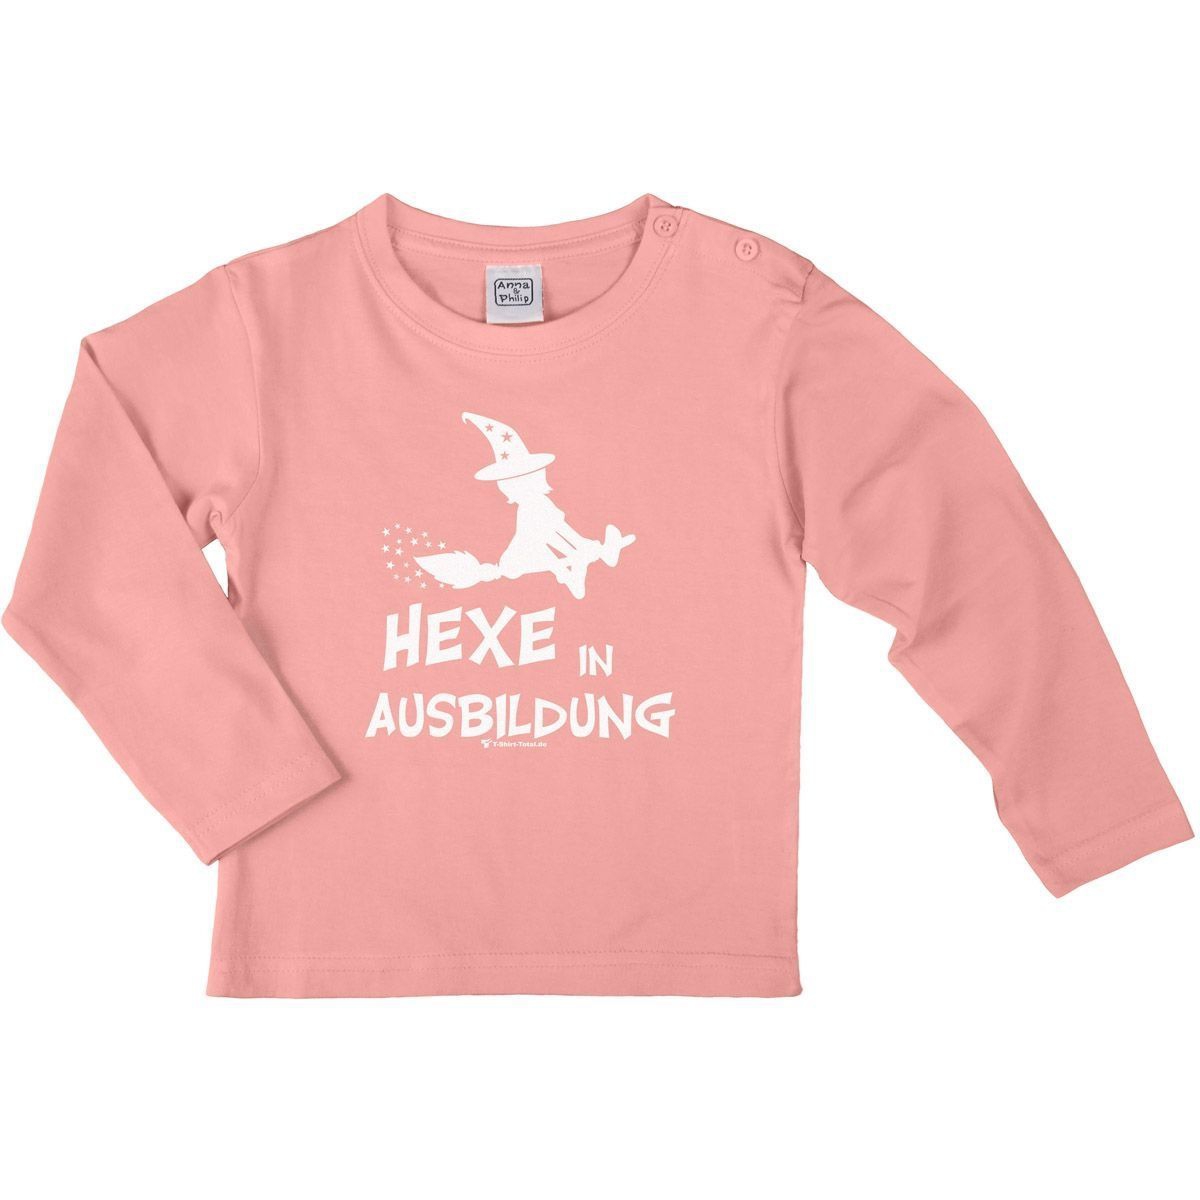 Hexe in Ausbildung Kinder Langarm Shirt rosa 110 / 116